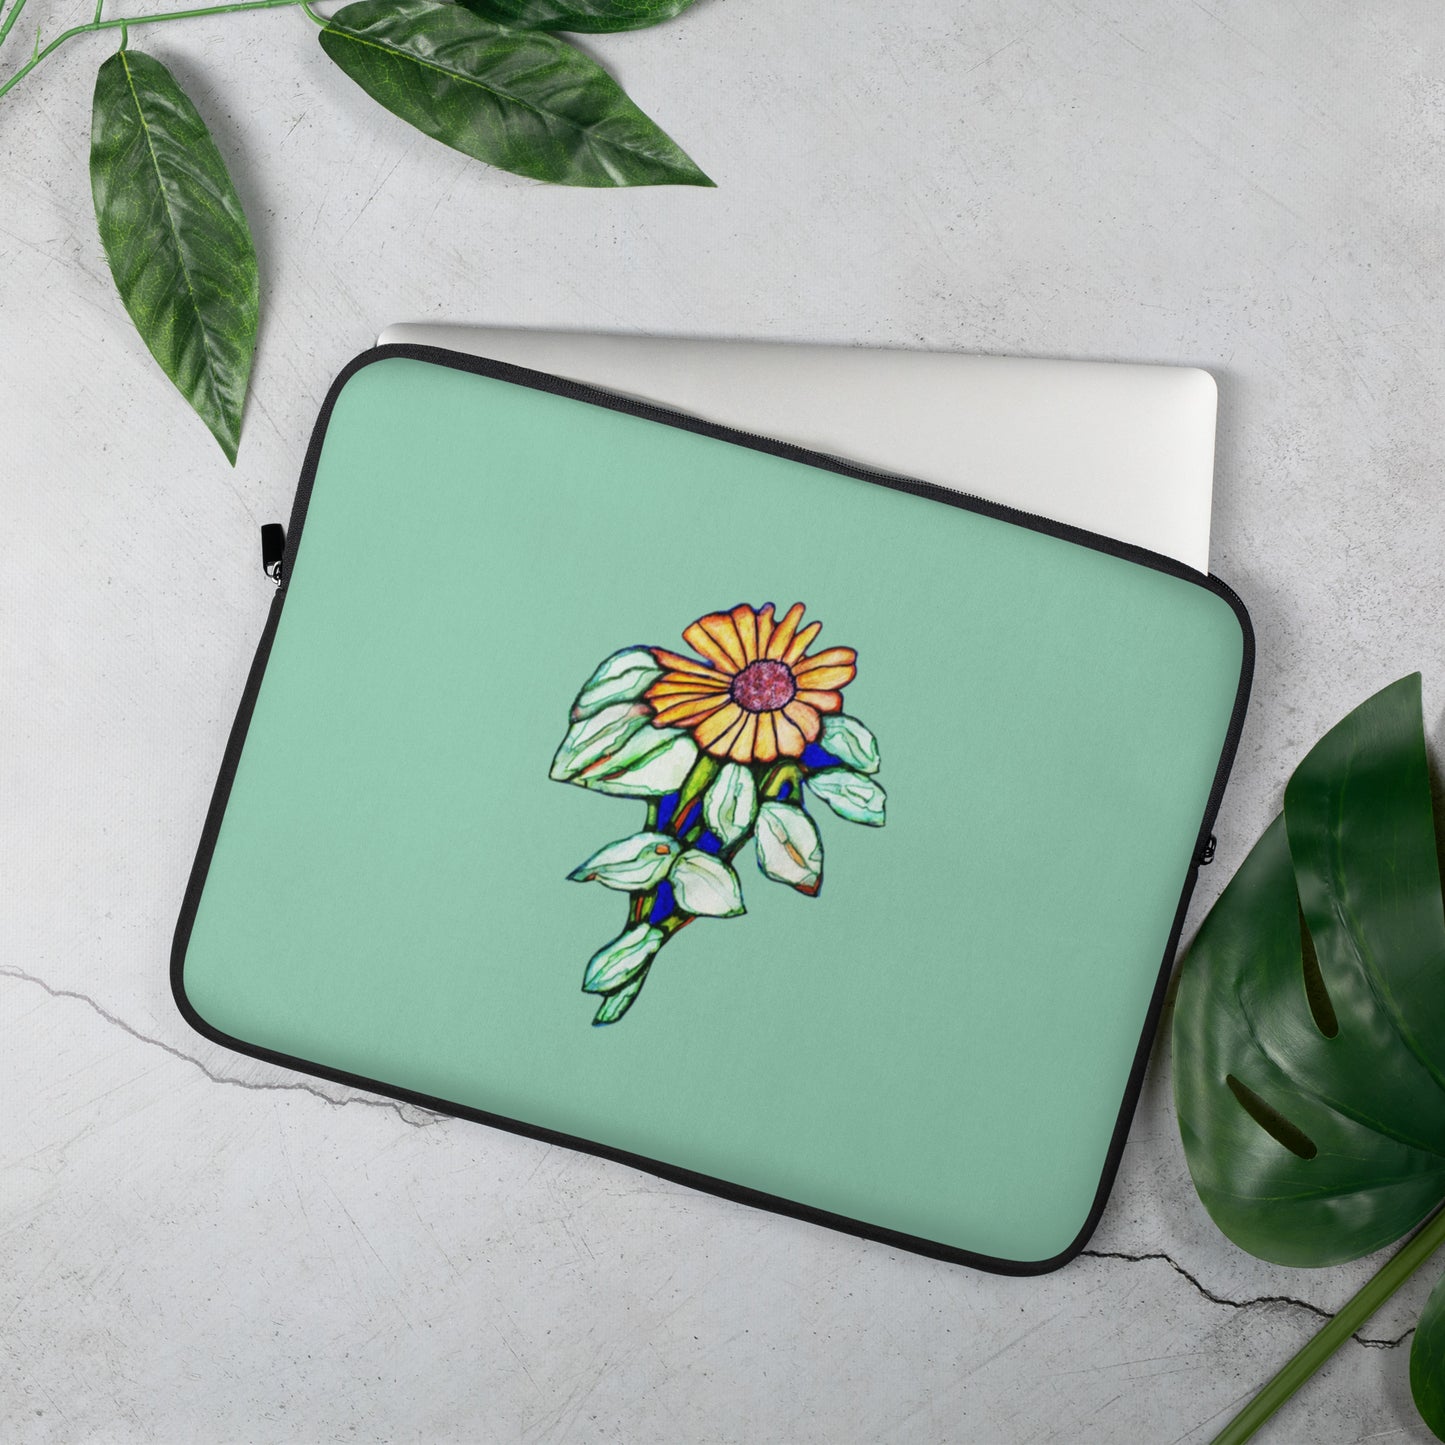 Single Flower Laptop Sleeve - Art Love Decor